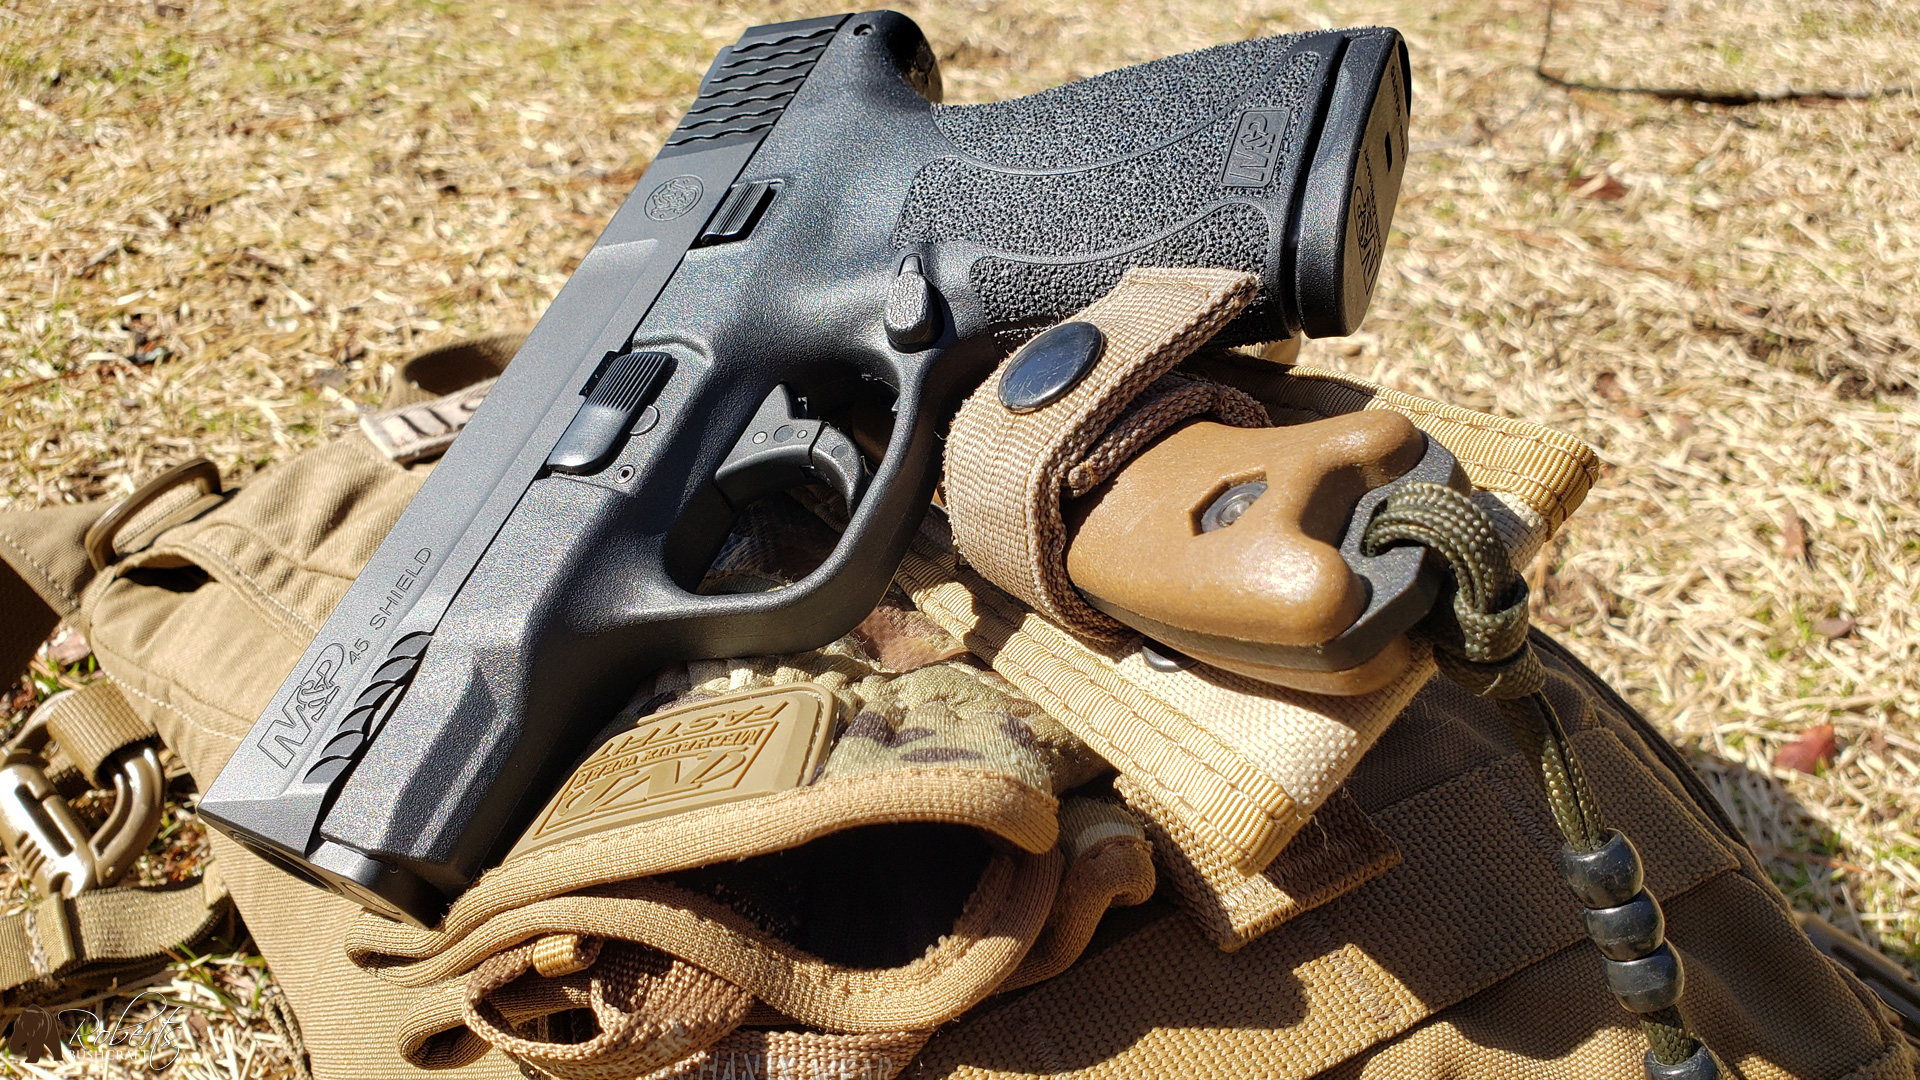 Smith & Wesson M&P45 ShieldM2.0 45 ACP Compact 7-Round Pistol